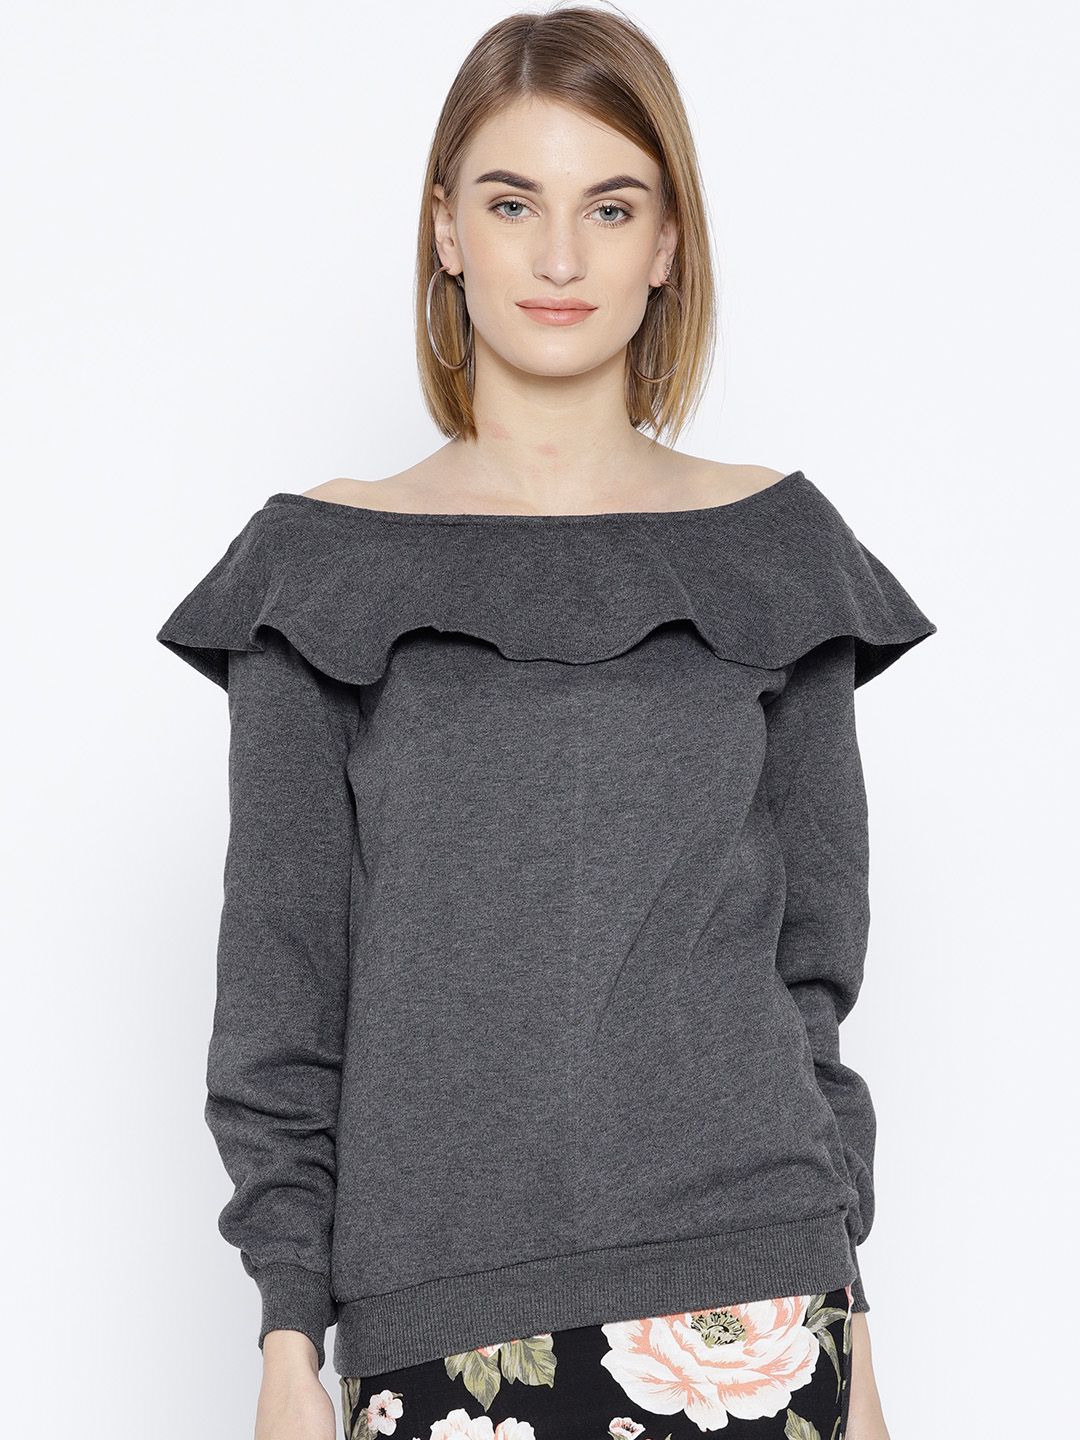 Belle Fille Women Charcoal Grey Solid Off-Shoulder Sweatshirt Price in India